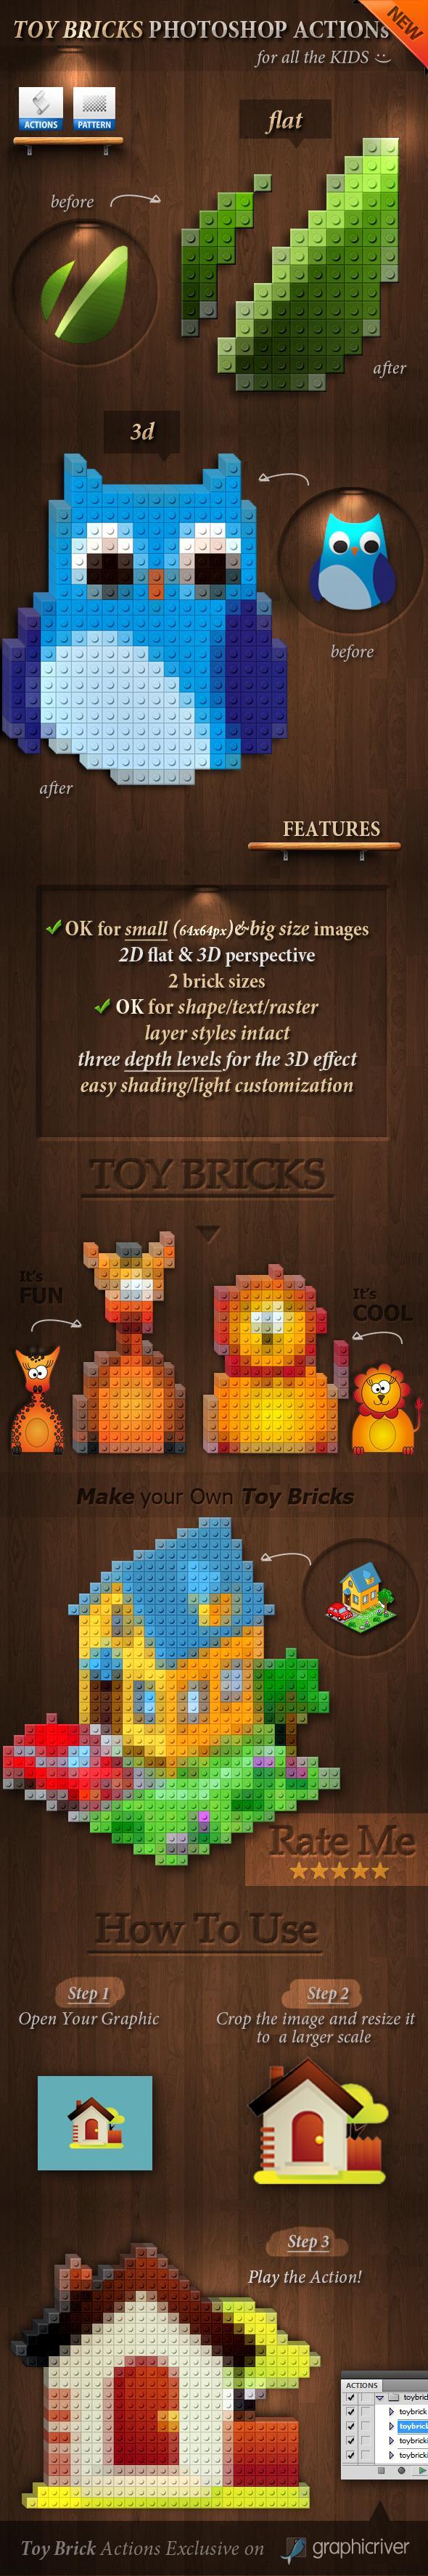 3D Toy Bricks Photoshop Actions